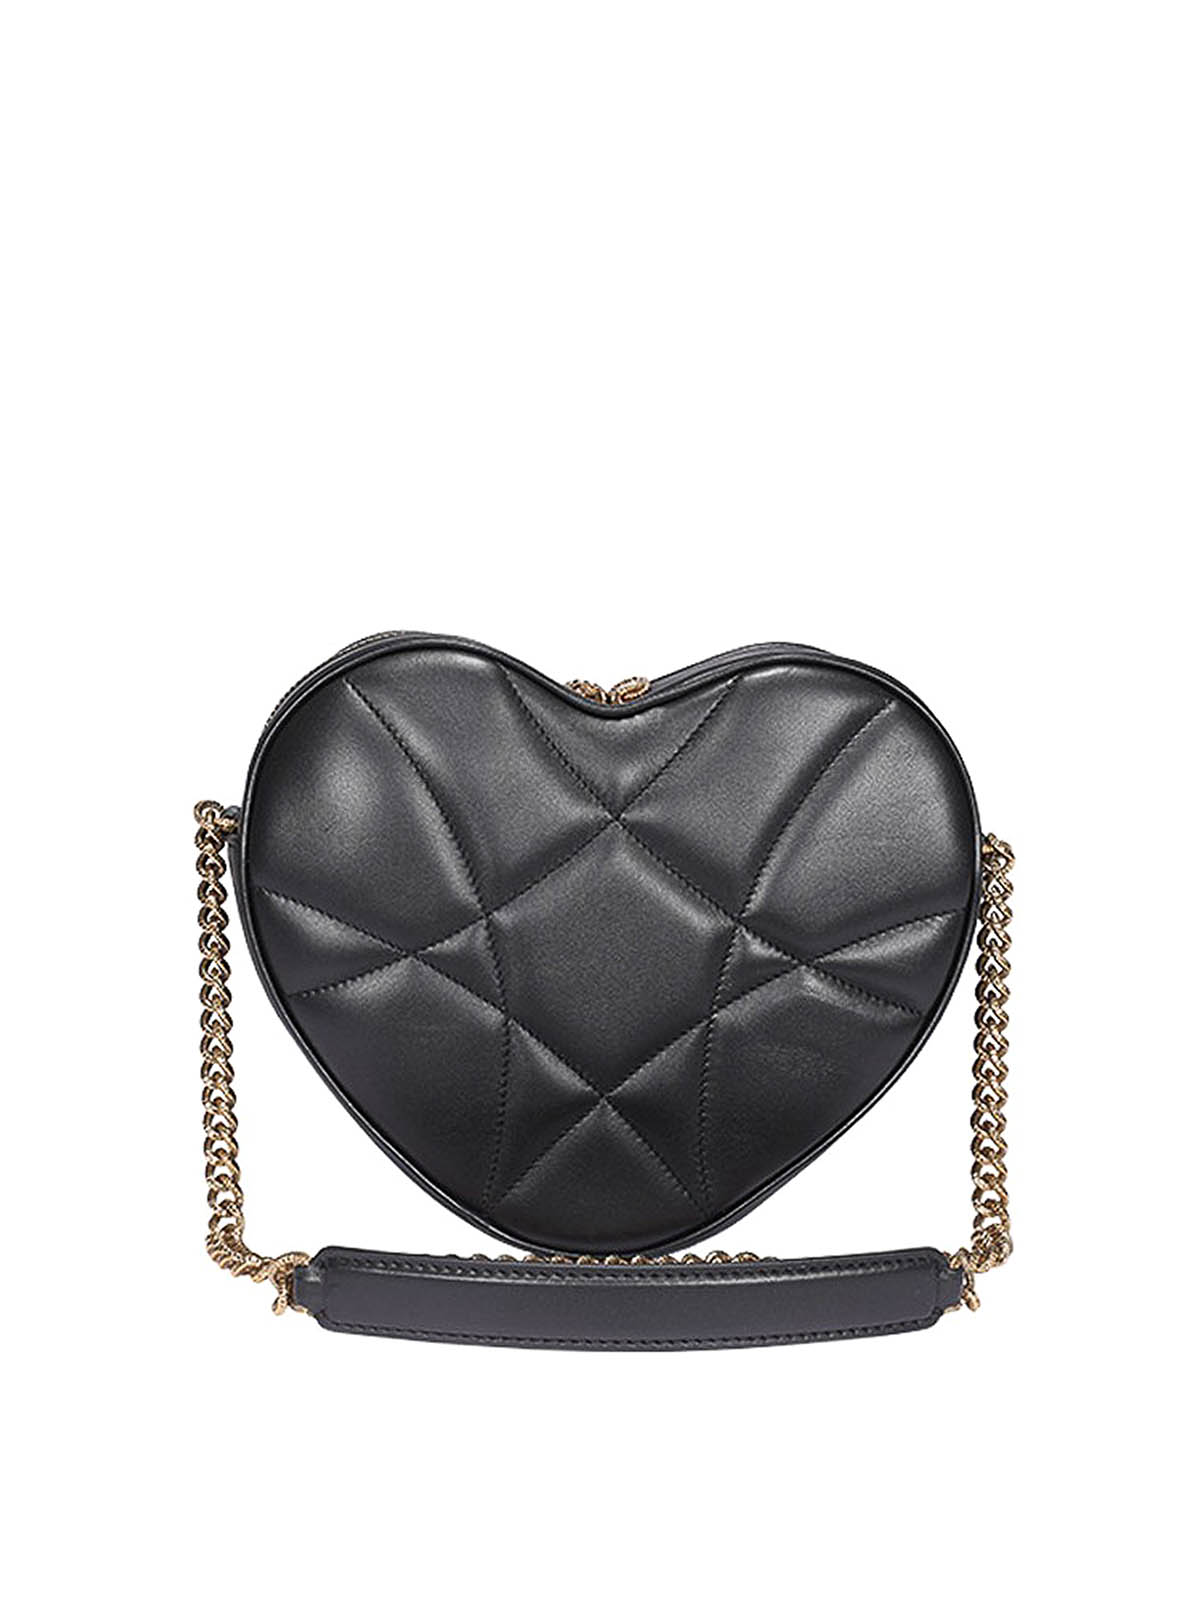 pink heart shaped chanel purse